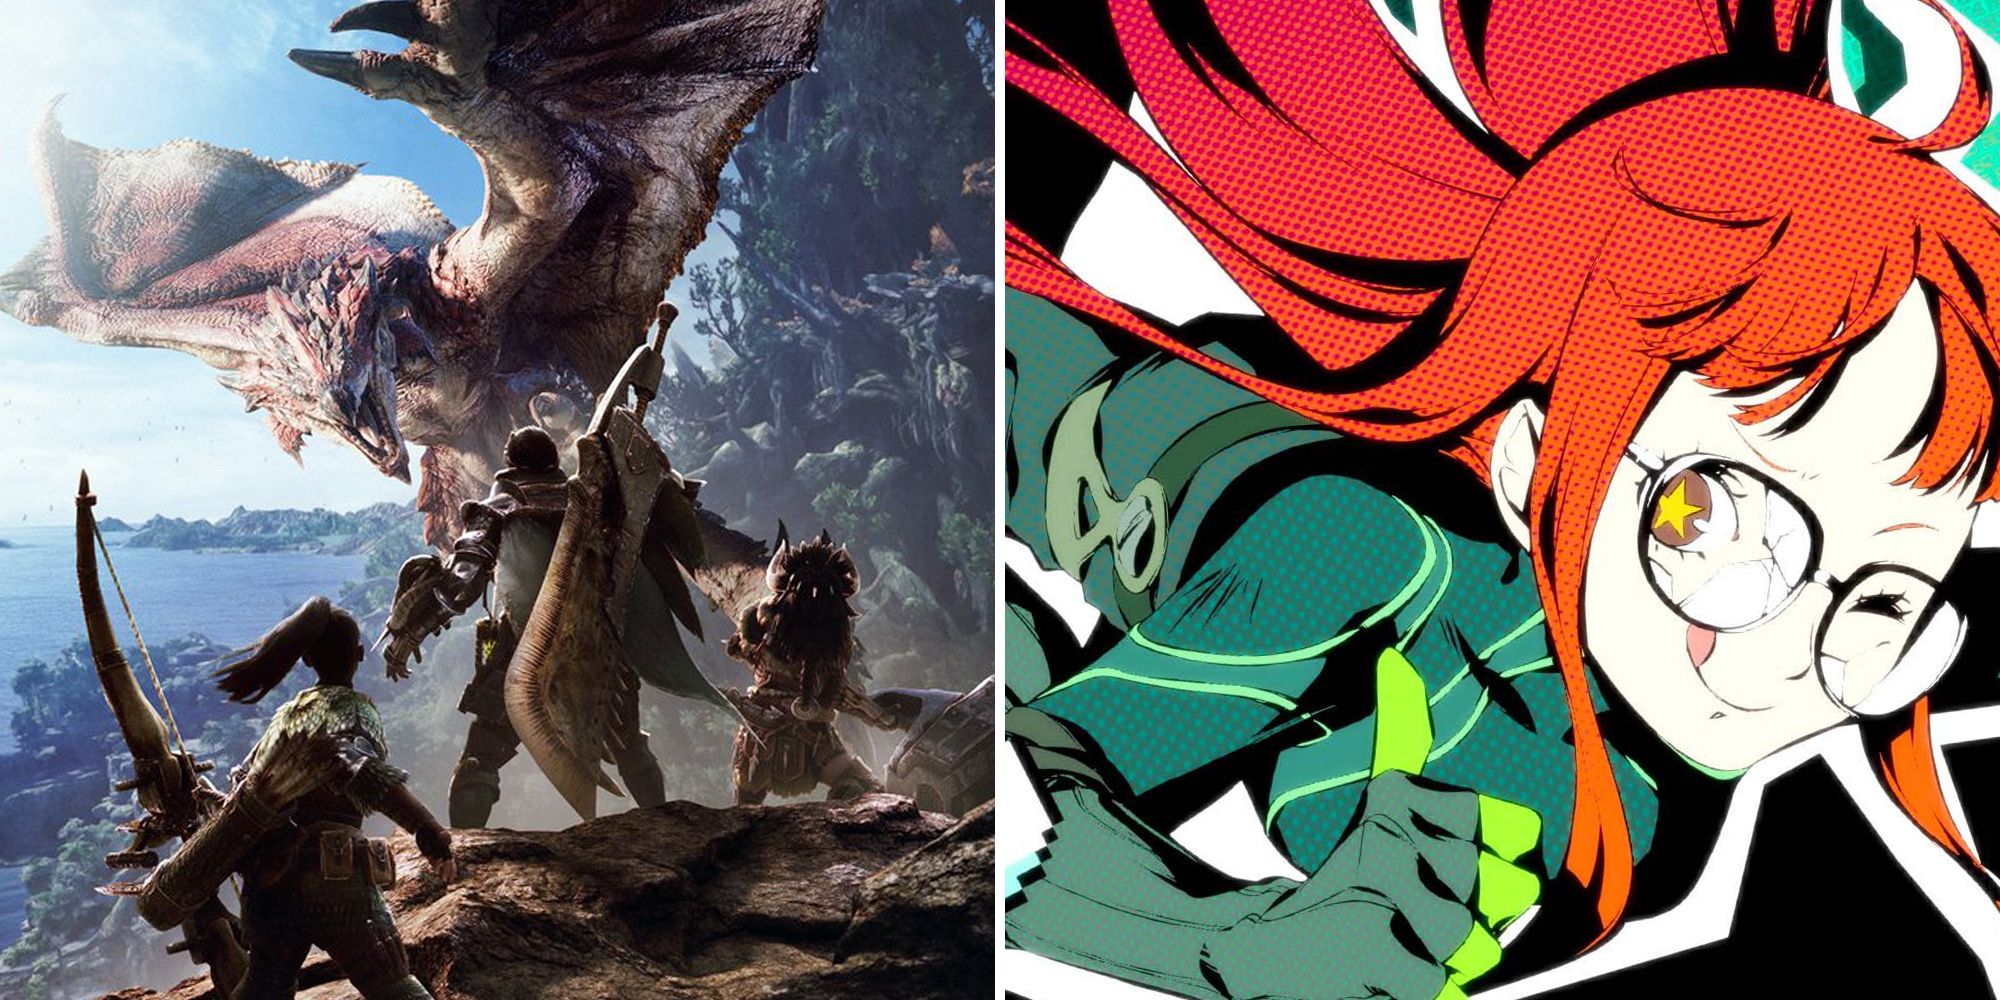 Split image. Monster Hunter World Poster on the left. Futaba Sakura from Persona 5 on the right.